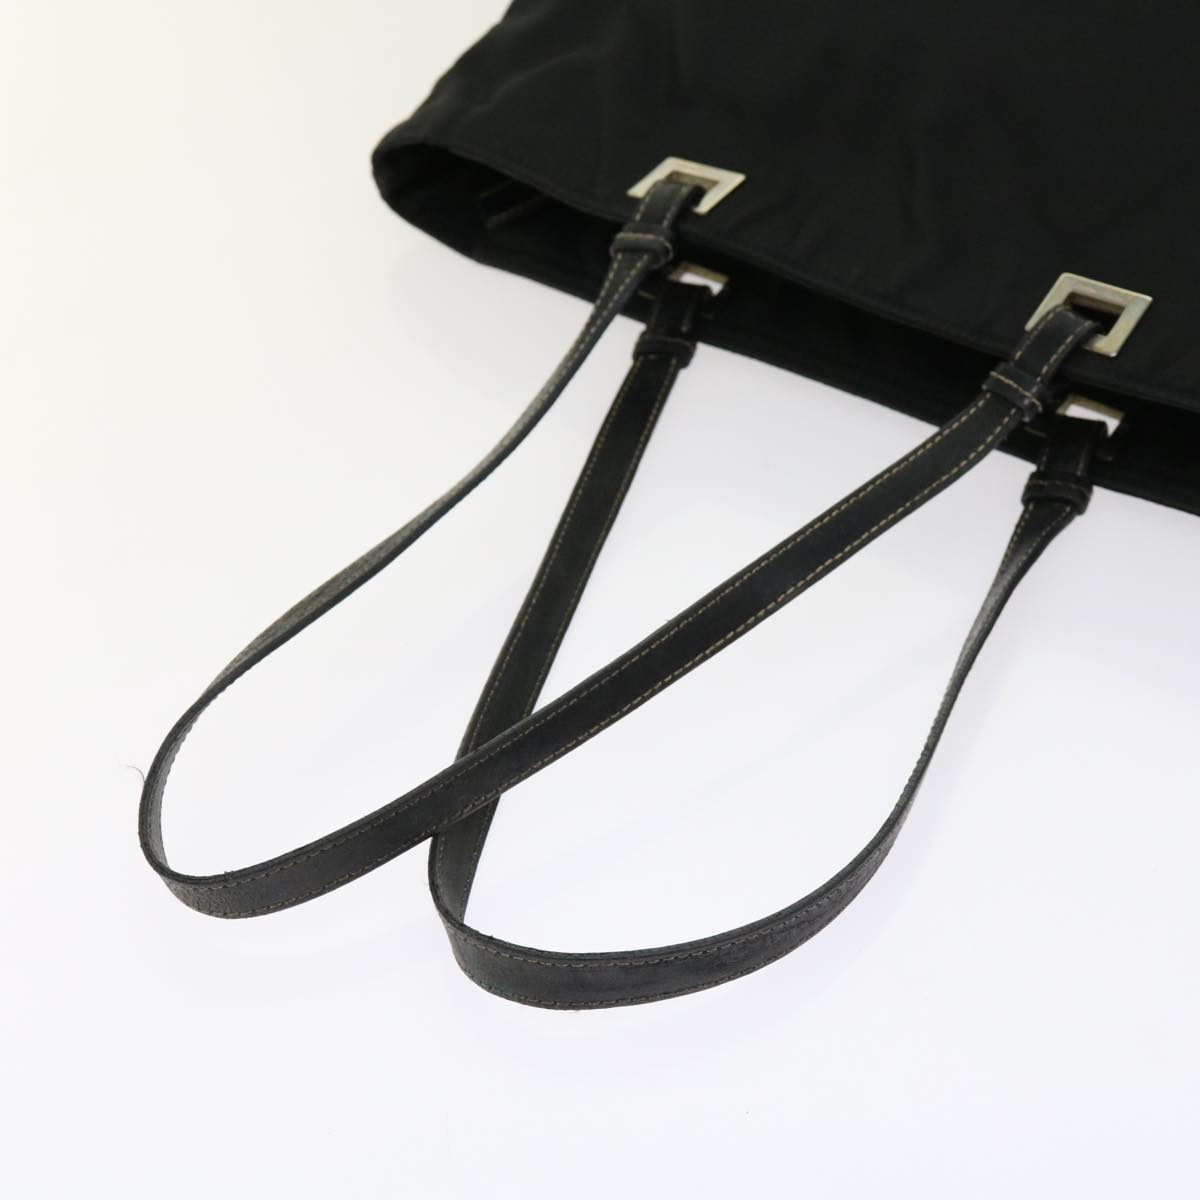 PRADA Tote Bag Nylon Black Auth 61173